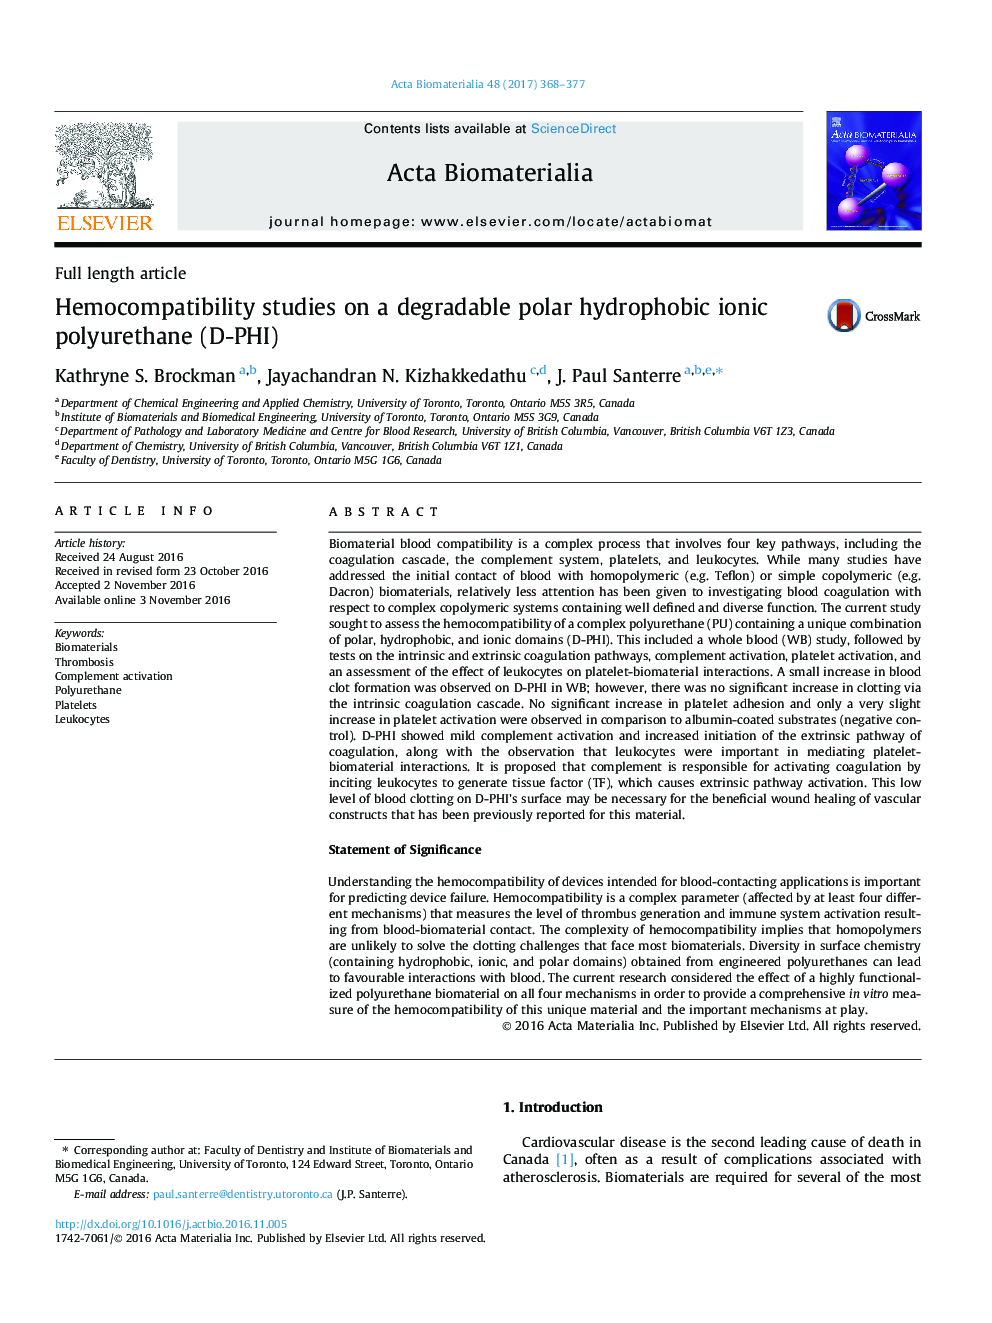 Full length articleHemocompatibility studies on a degradable polar hydrophobic ionic polyurethane (D-PHI)